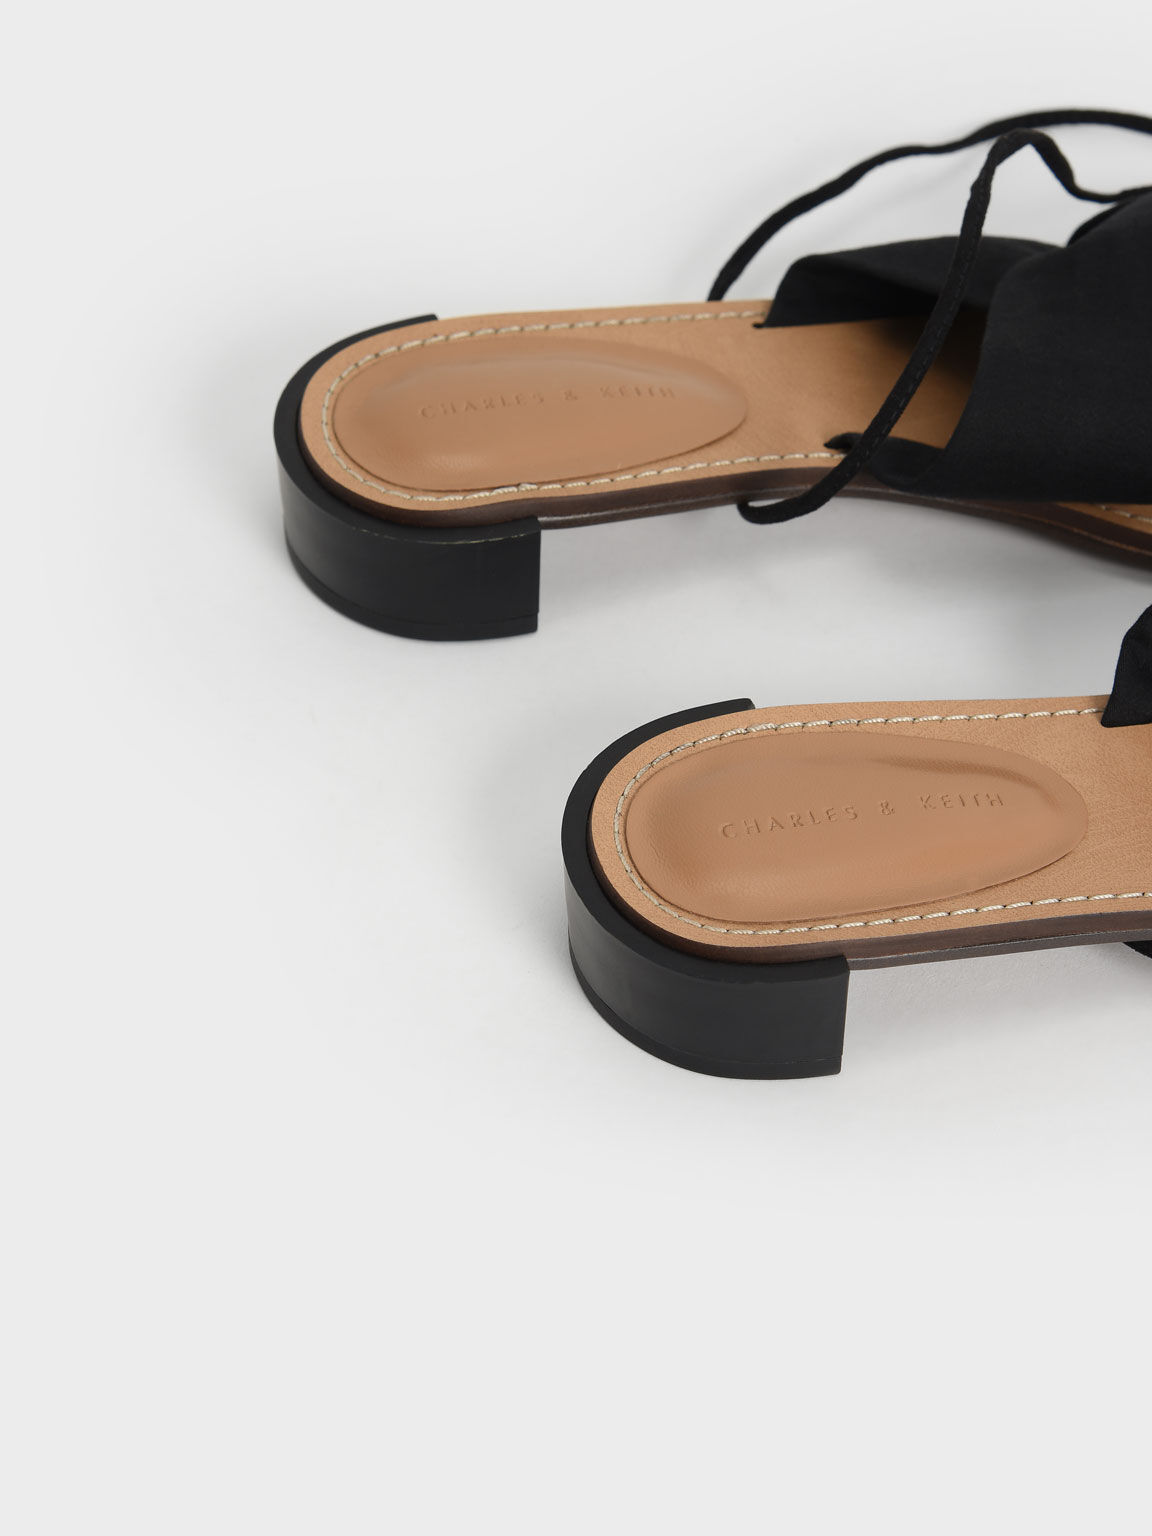 Knotted Tie-Around Sandals, Black, hi-res